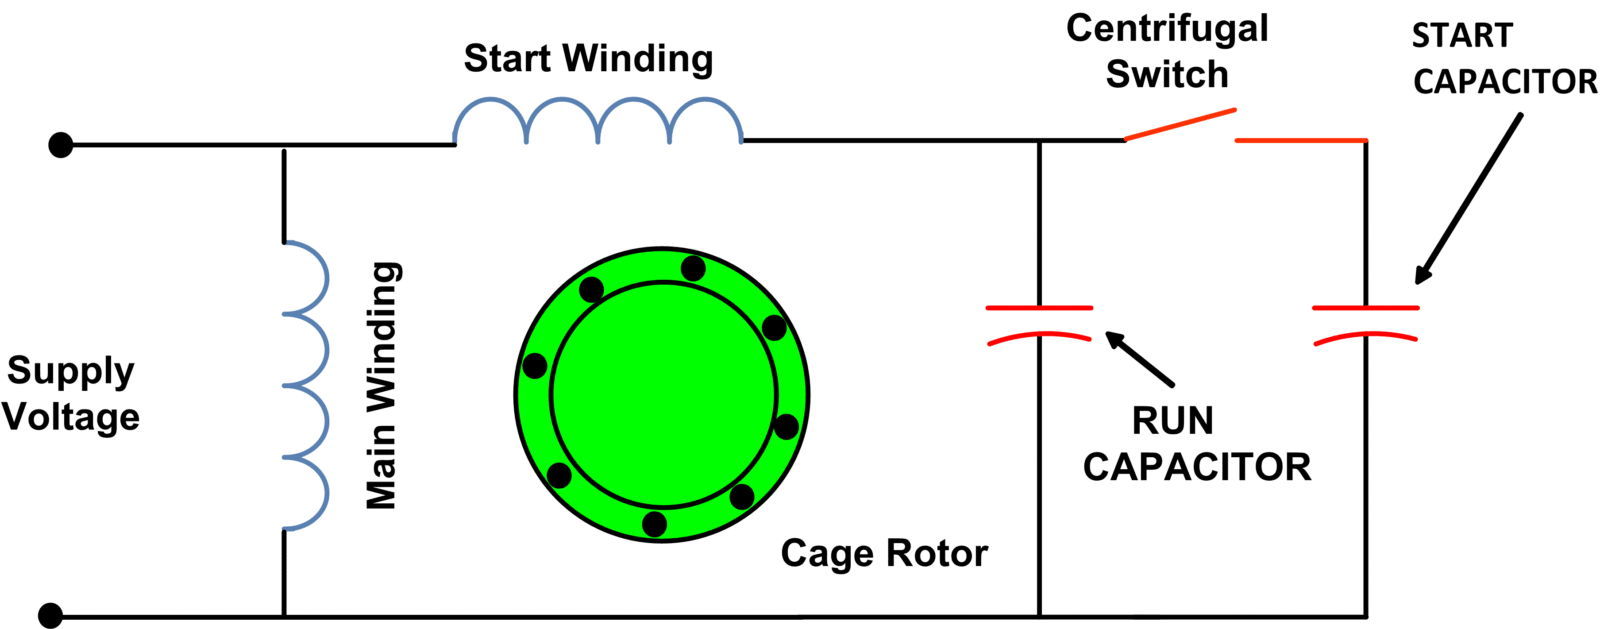 Diagram Sears Airpressor Wiring Diagram Full Version Hd Quality Wiring Diagram Gantt Diagramm Summercircusbz It